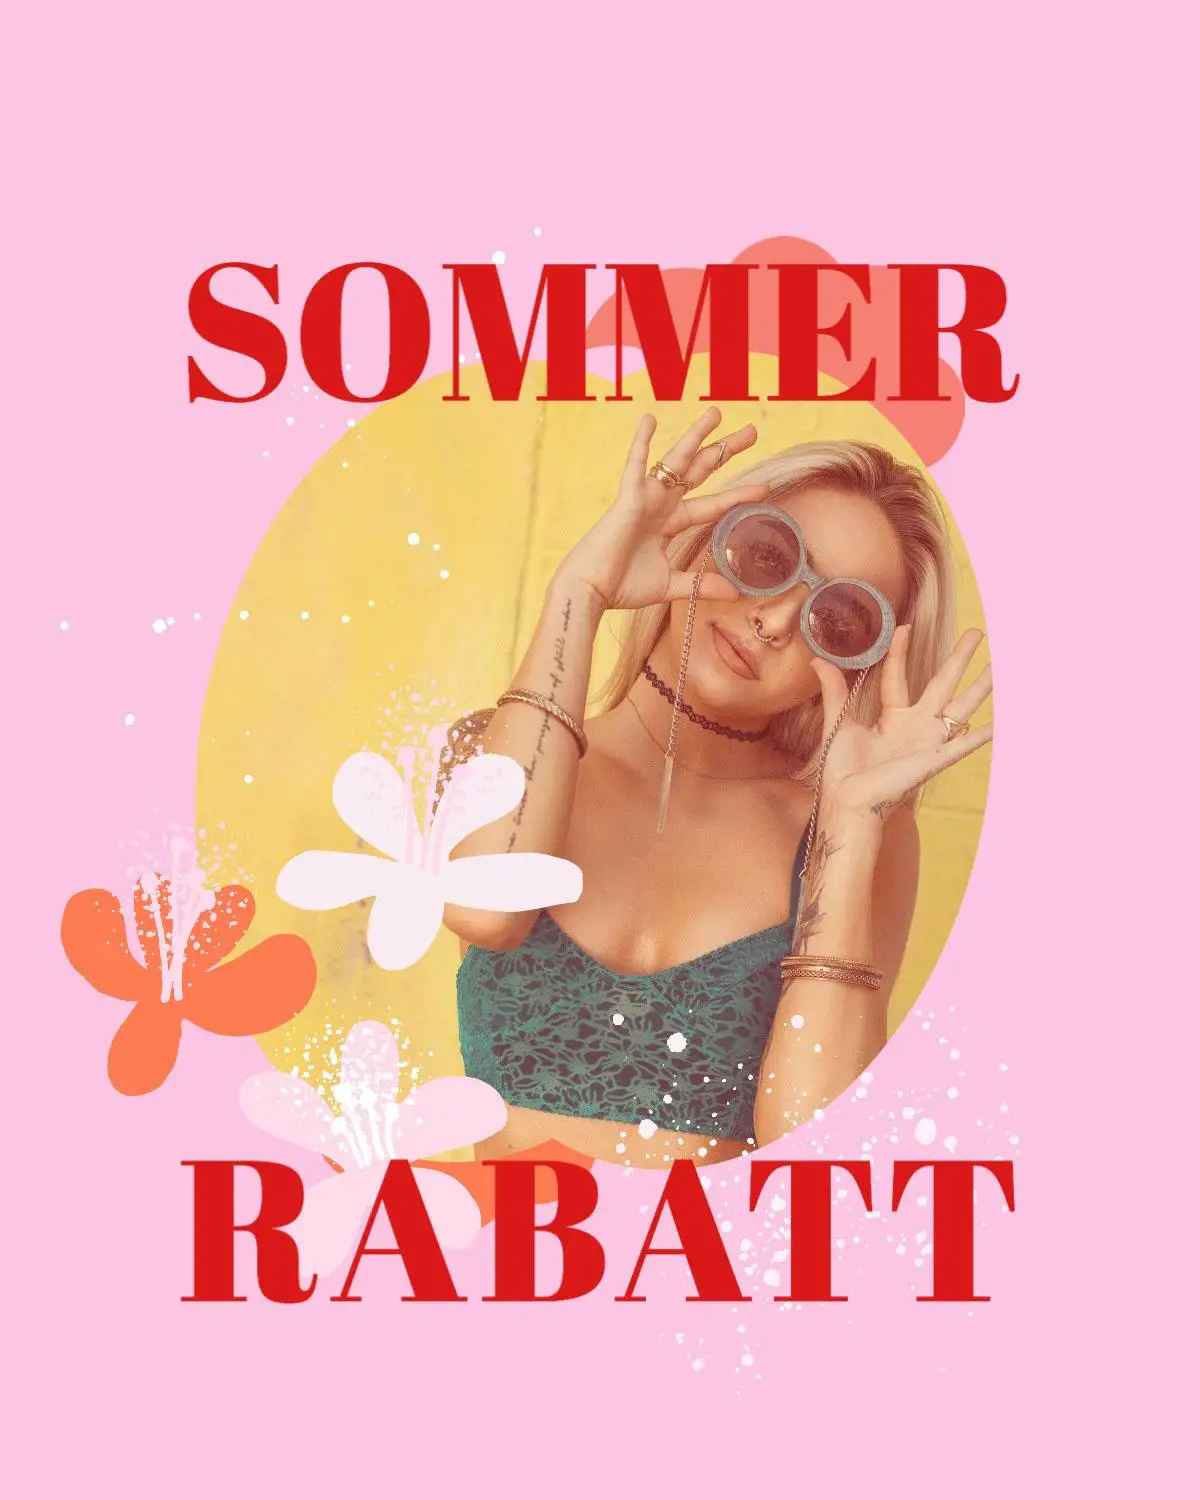 Rose Red Summer Woman Sunglasses Store Sale Instagram Portrait Ad